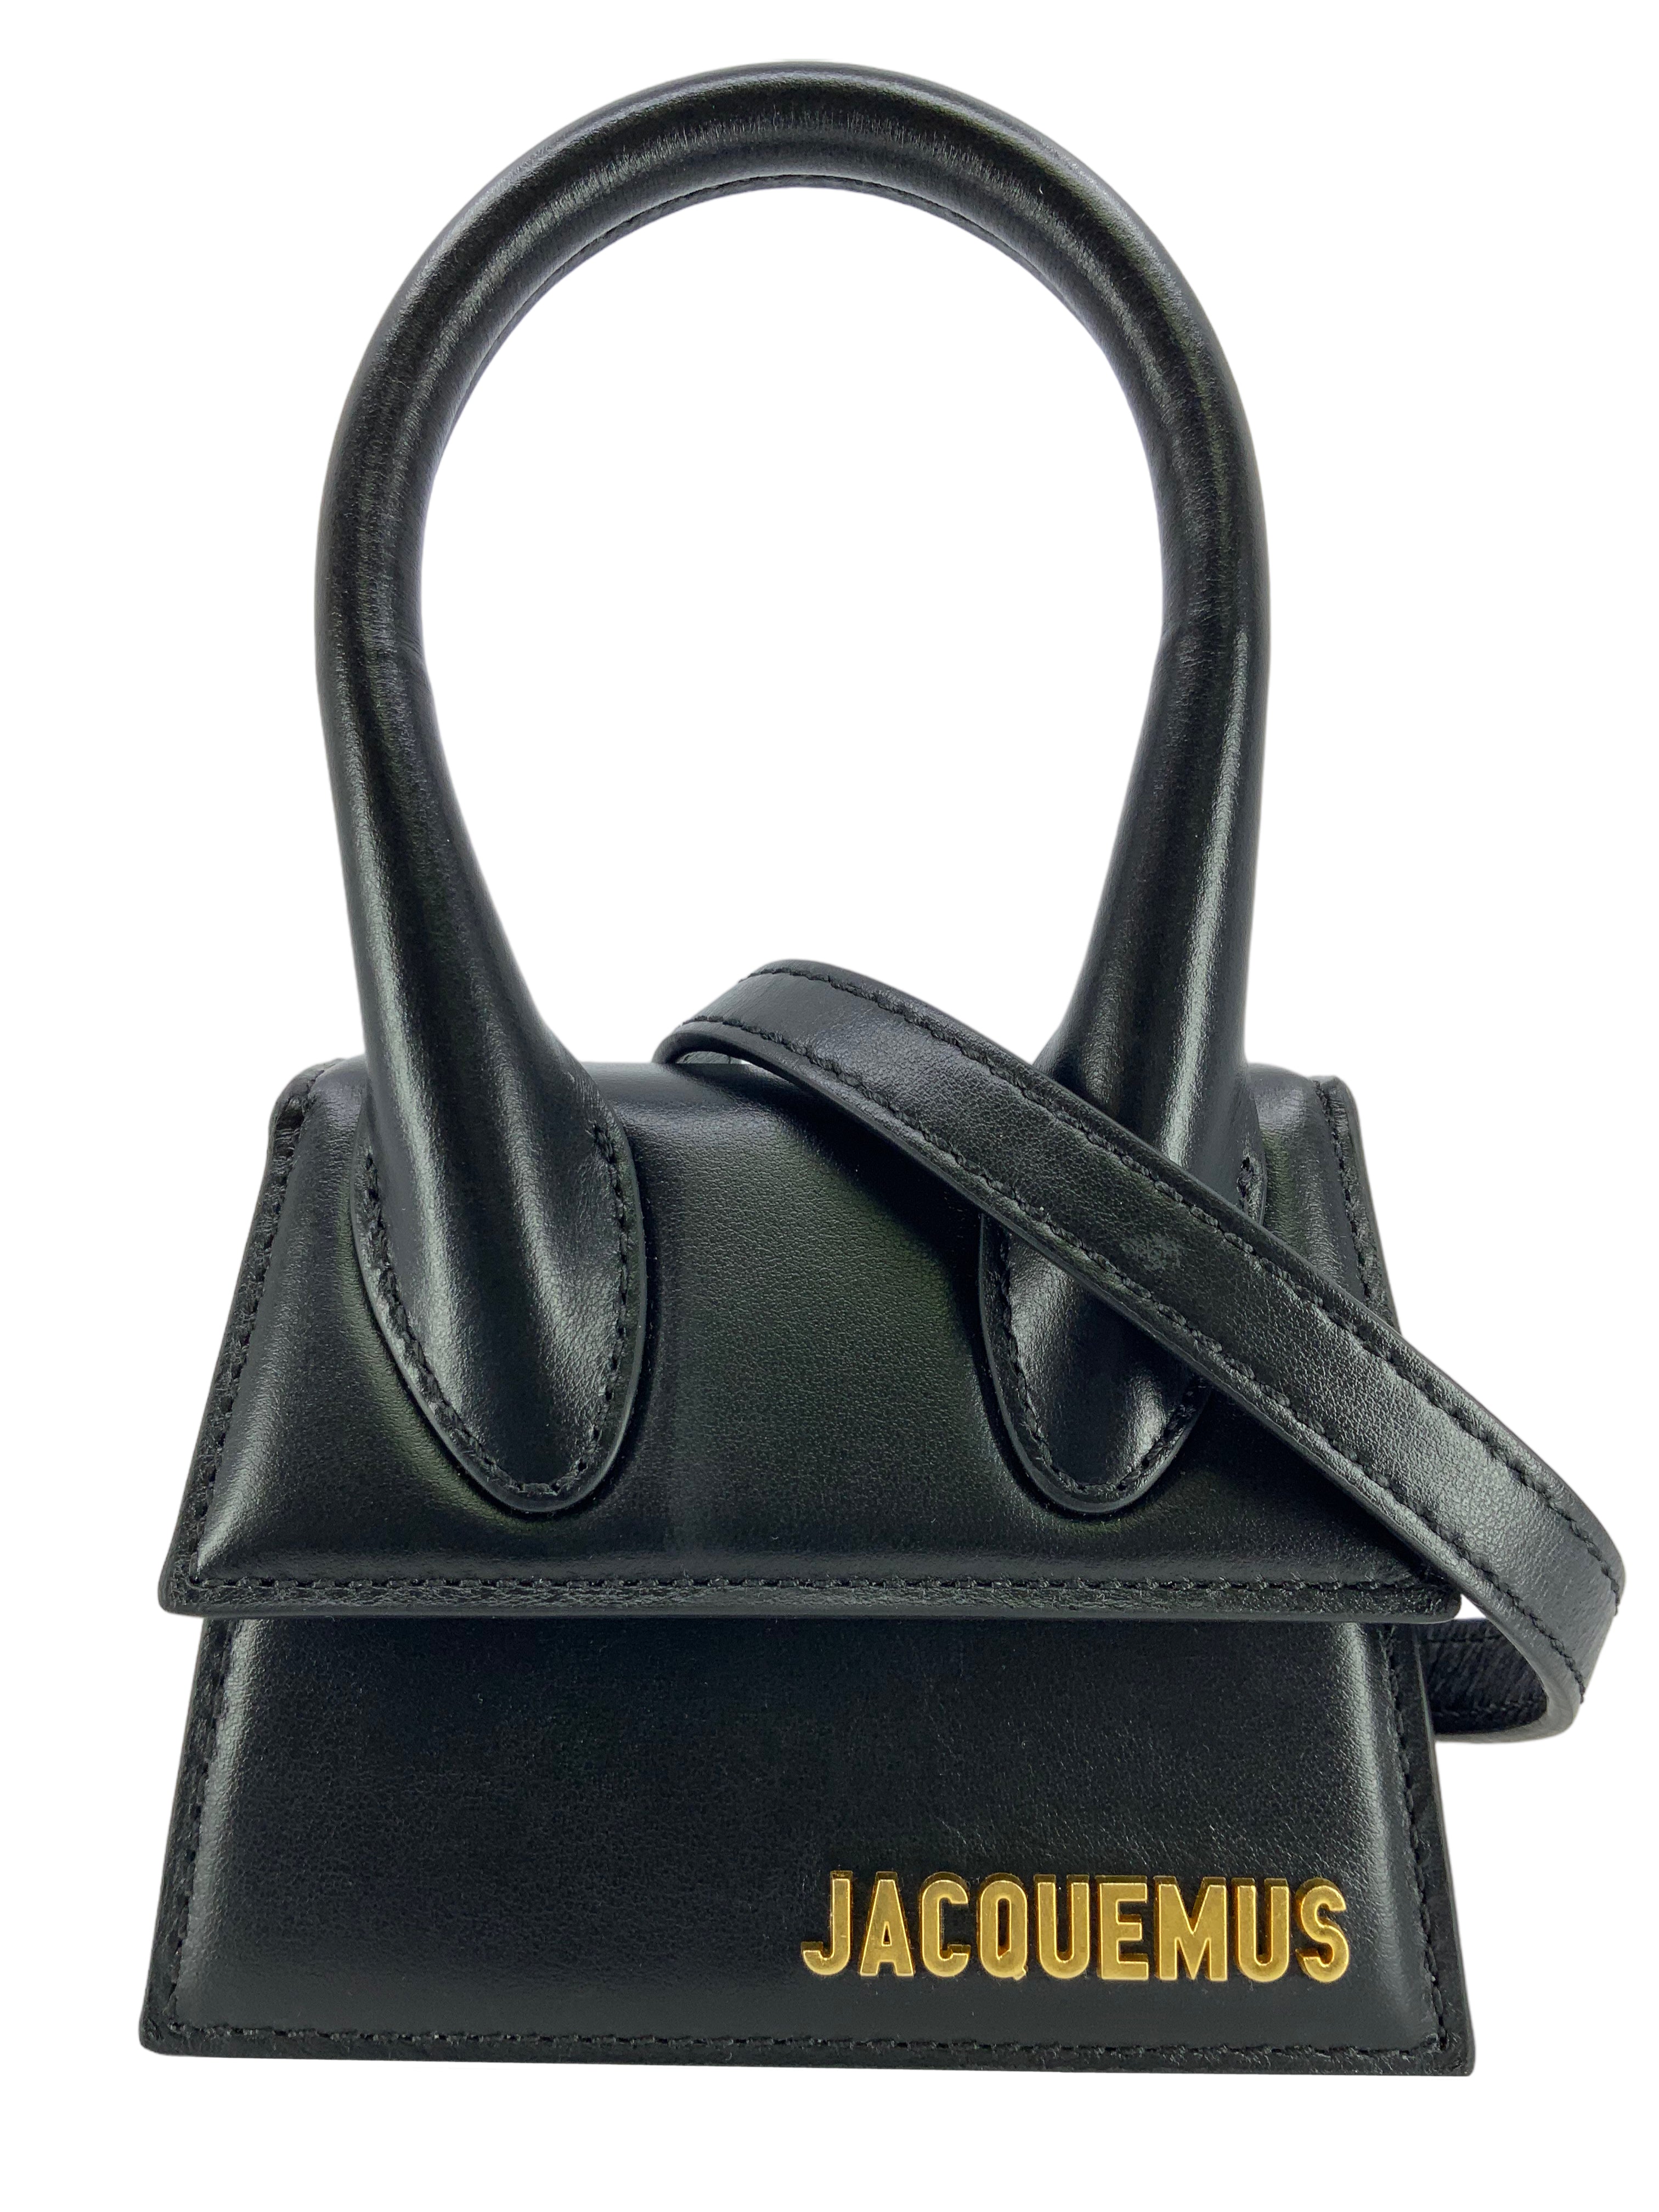 JACQUEMUS Le Chiquito mini leather tote